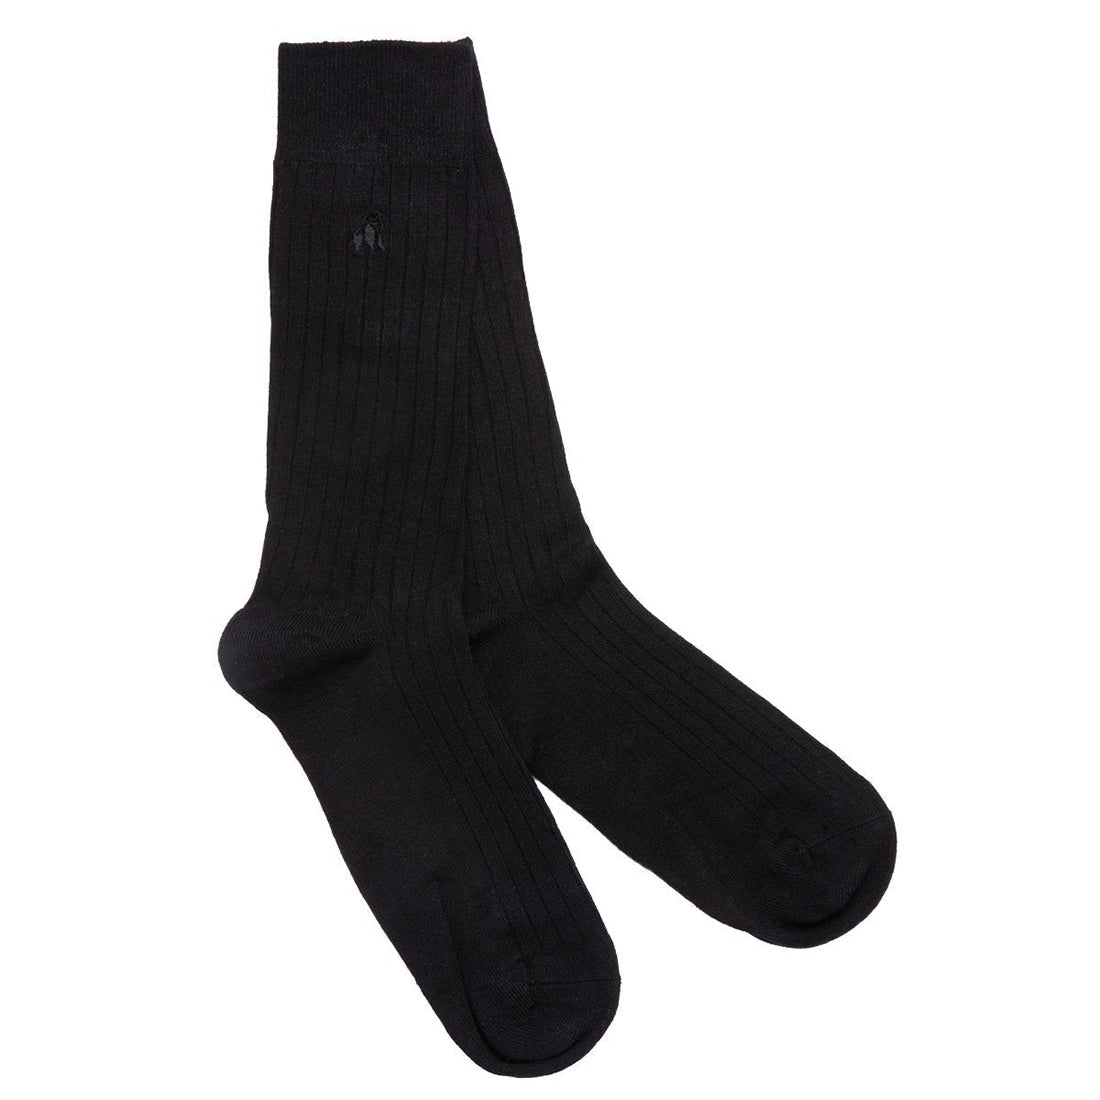 Black Bamboo Socks (Comfort Cuff)